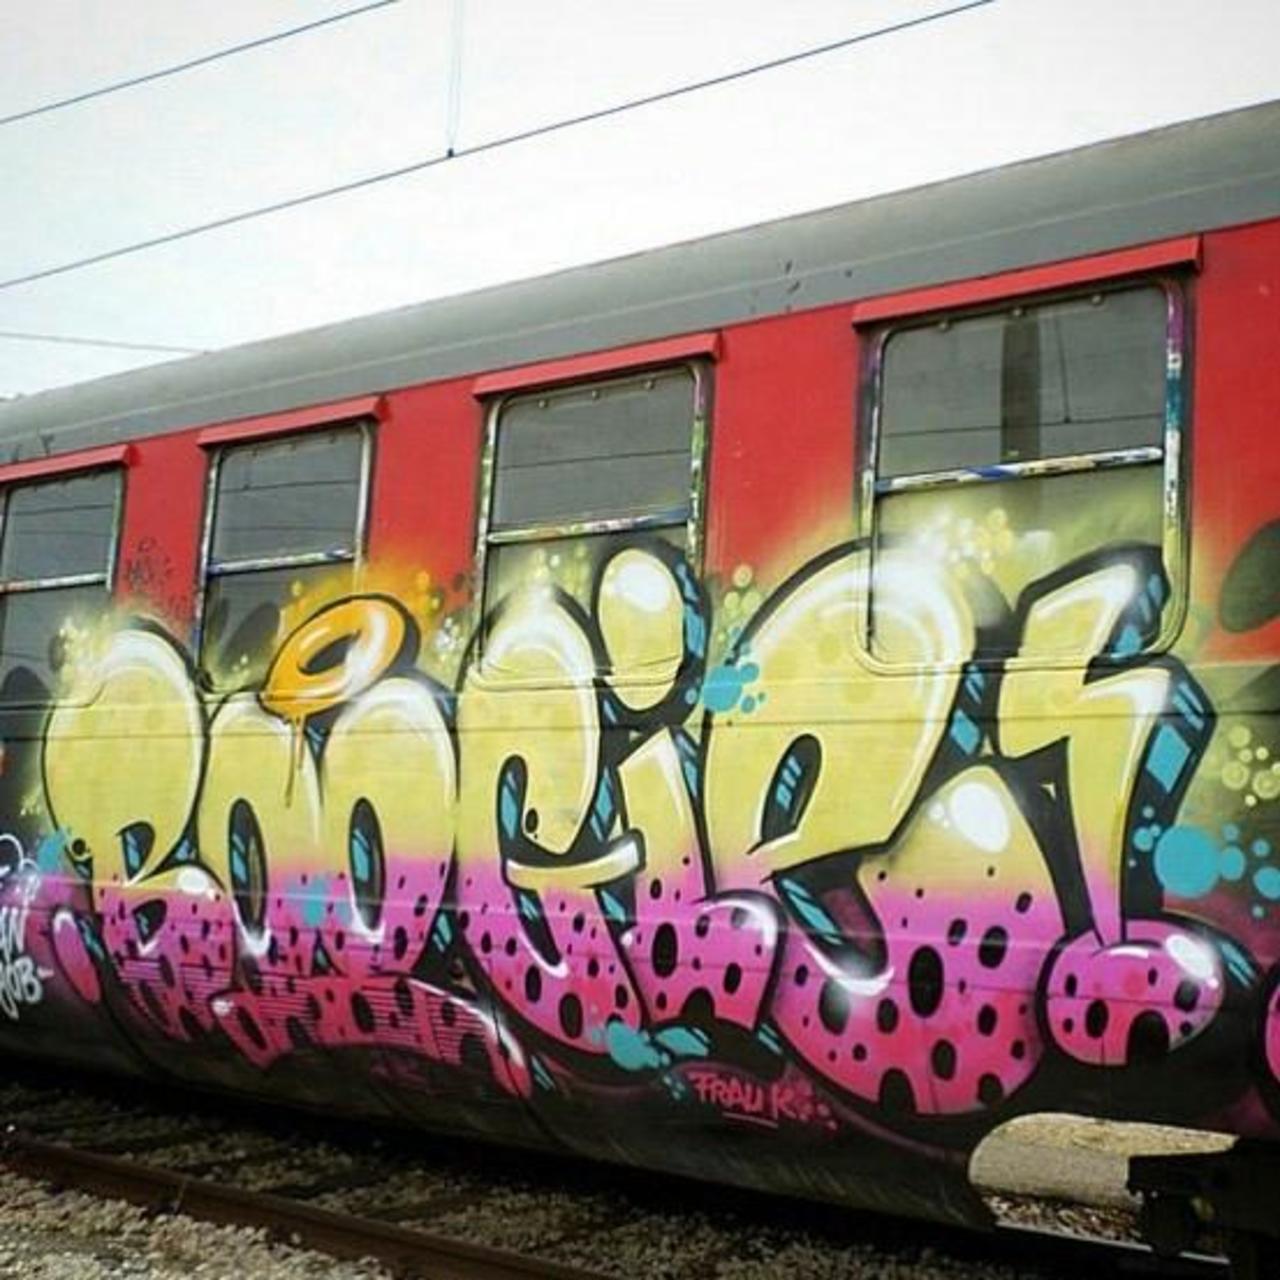 RT @artpushr: via #swas_graffiti "http://ift.tt/1O2s2pi" #graffiti #streetart http://t.co/9SvYdPscUG